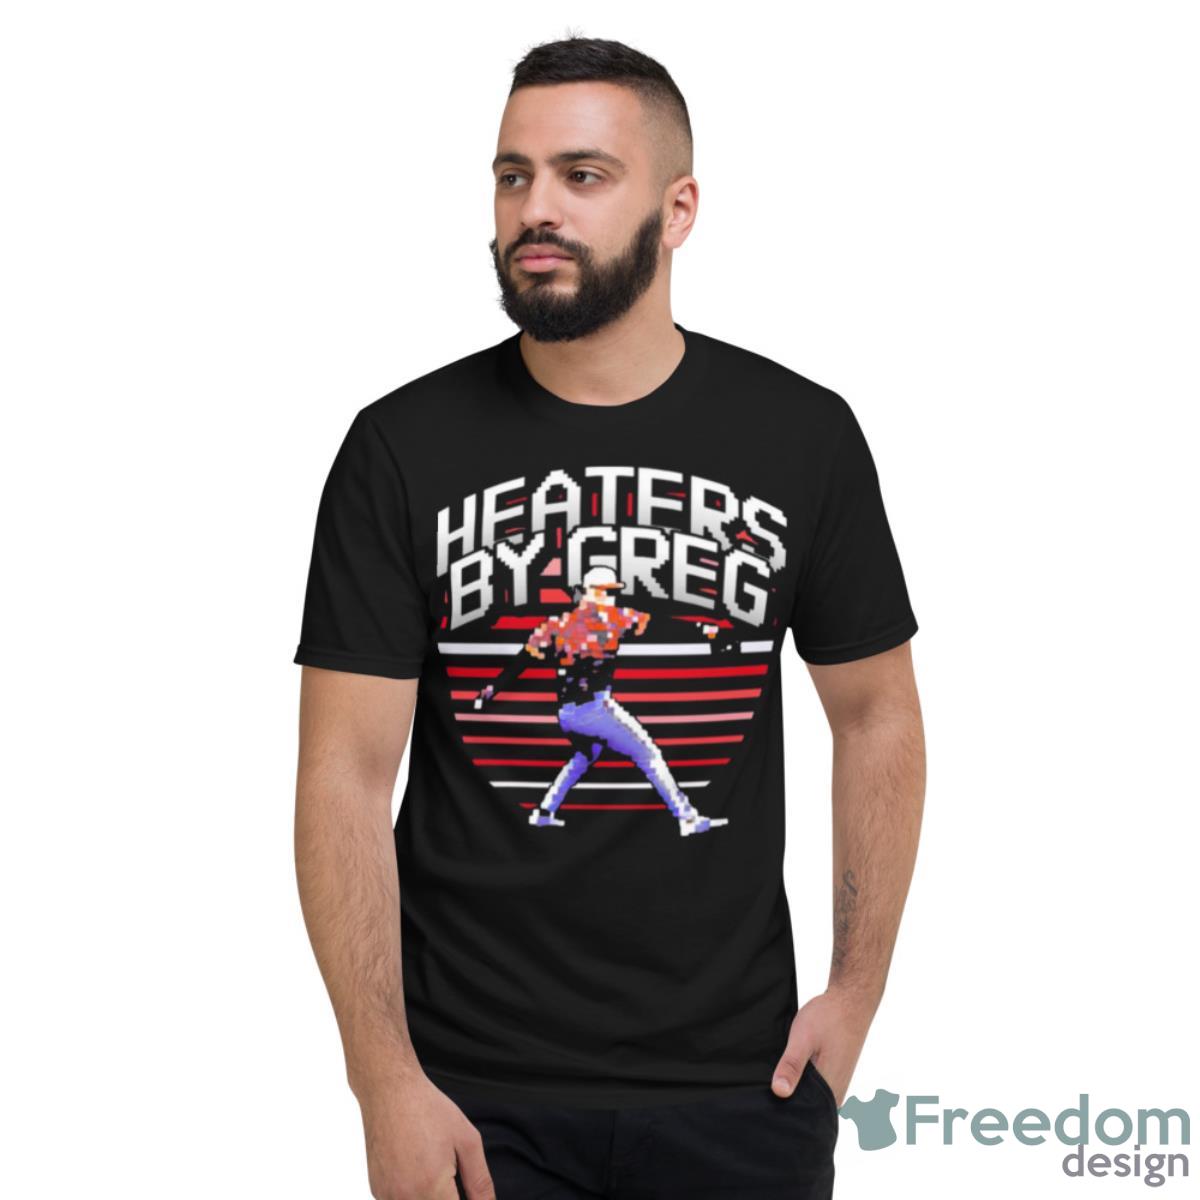 Greg Farone Heaters By Greg Shirt